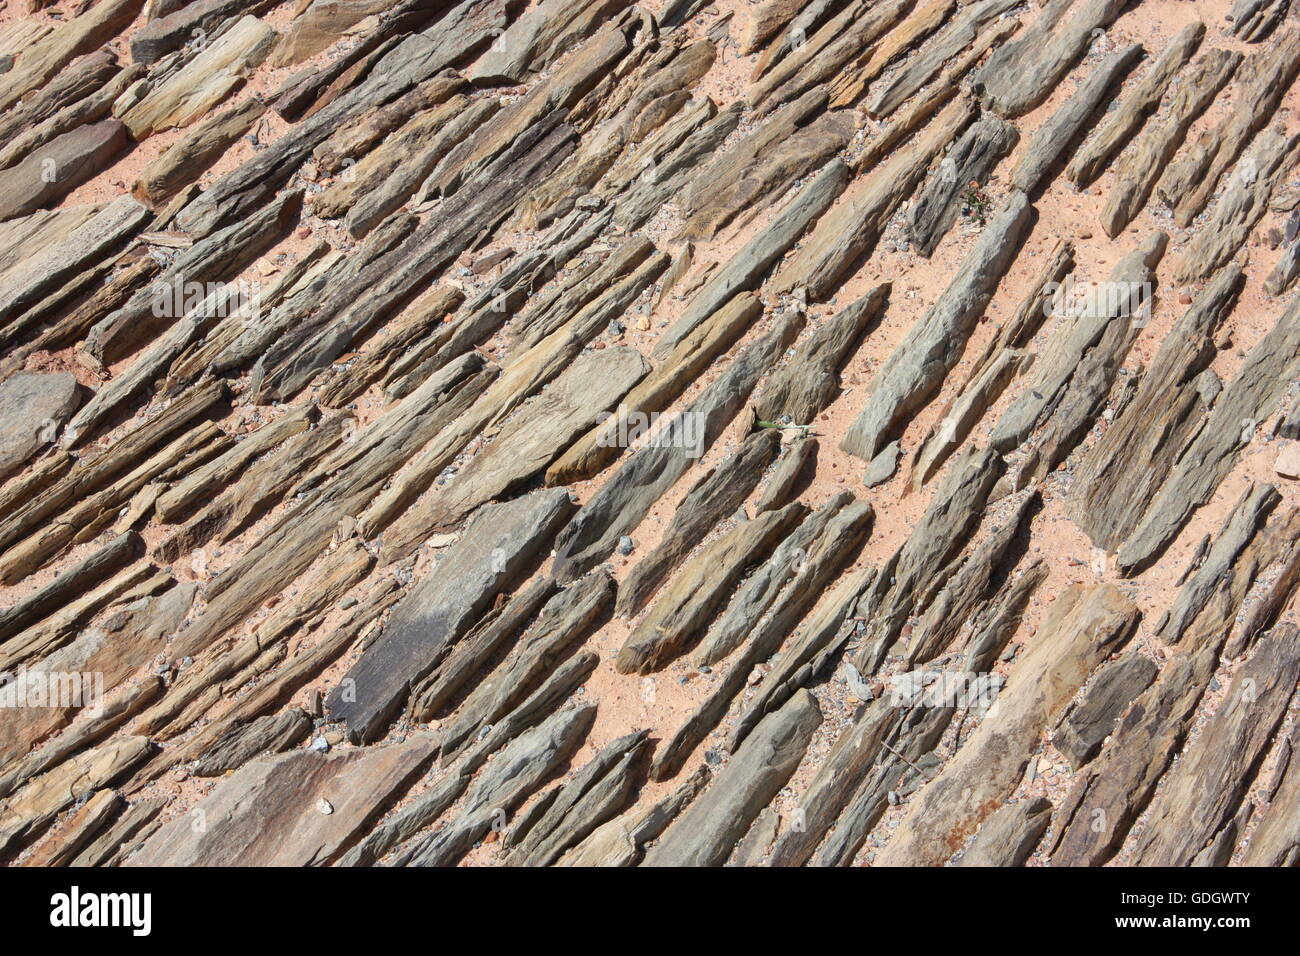 rocky ground surface background Stock Photo